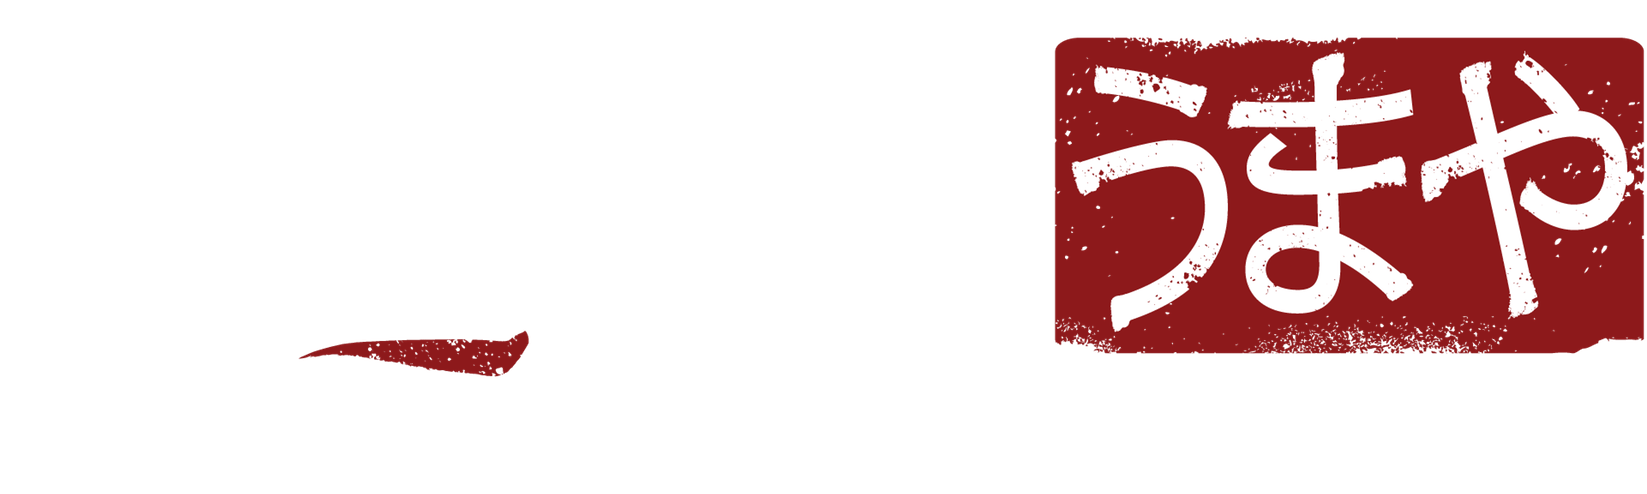 Home - Umaya Dc - Izakaya (1656x507), Png Download